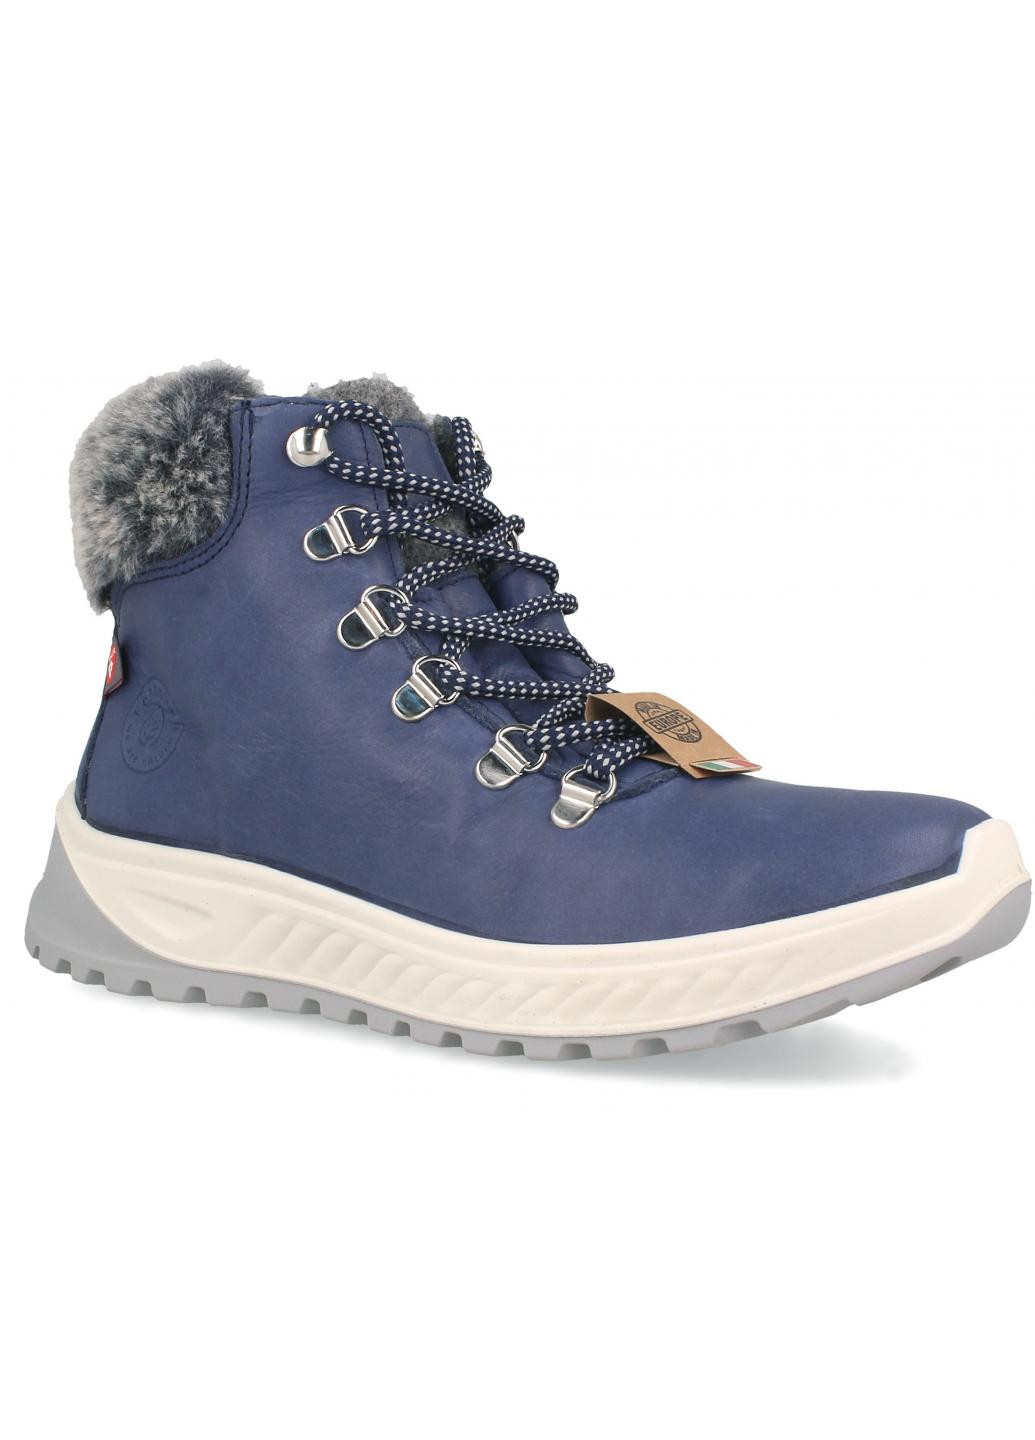 Зимние женские ботинки primaloft 14541-13 made in europe Forester